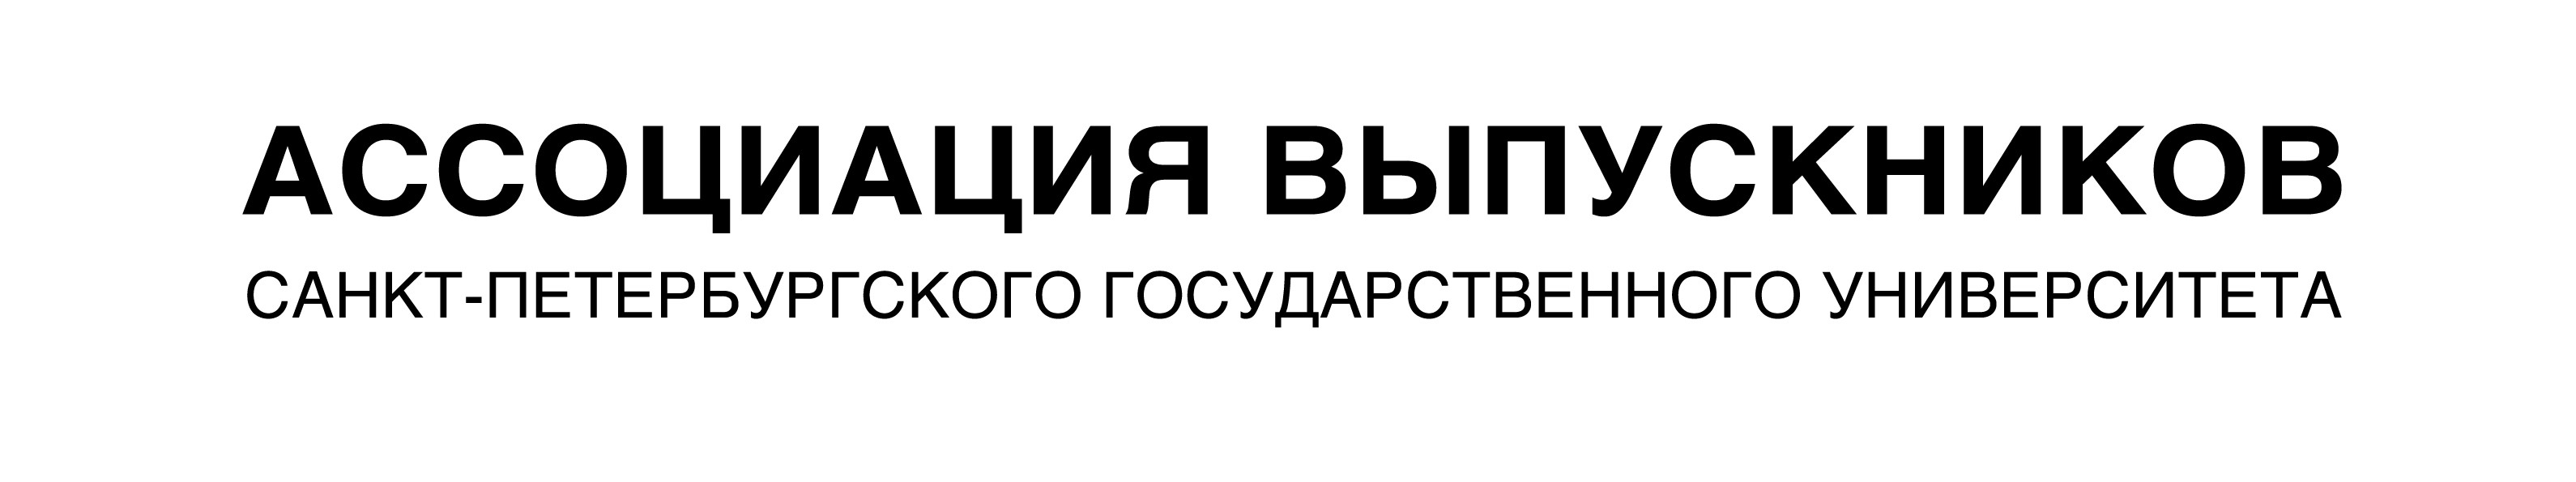 AV_SPBGU_font_logo1_1a3630a3